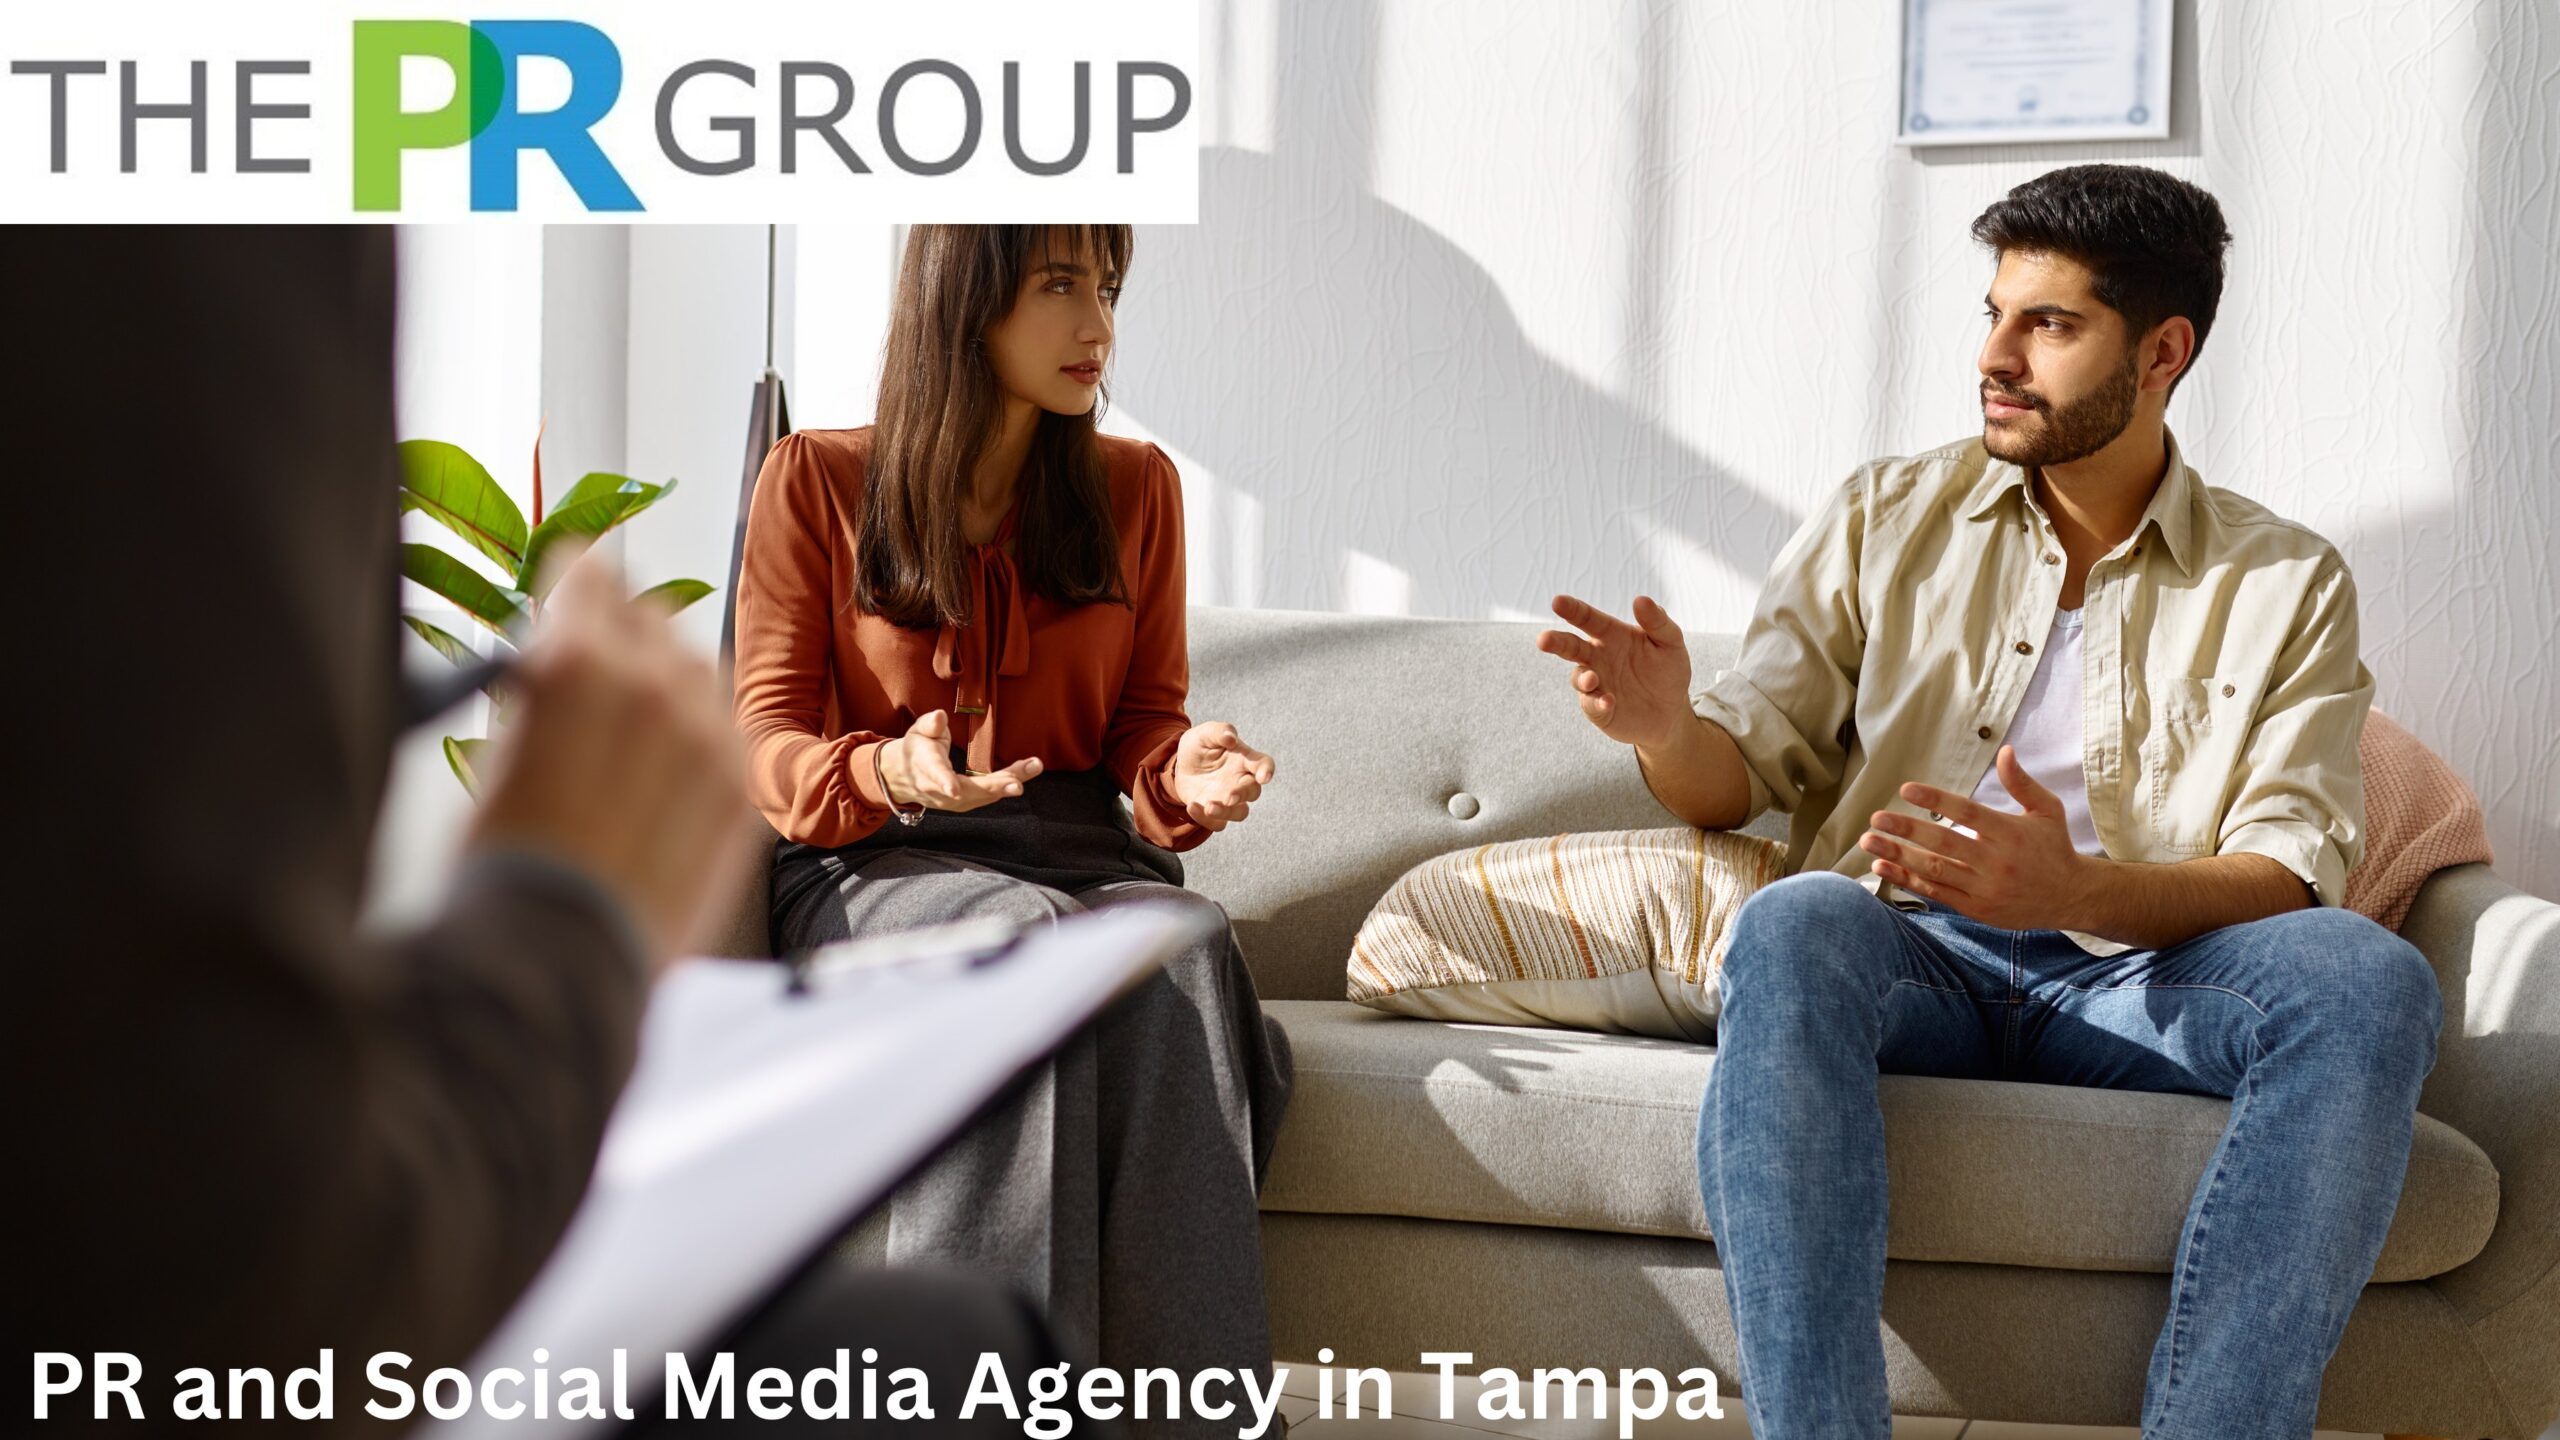 Pr And Social Media Agency Tampa